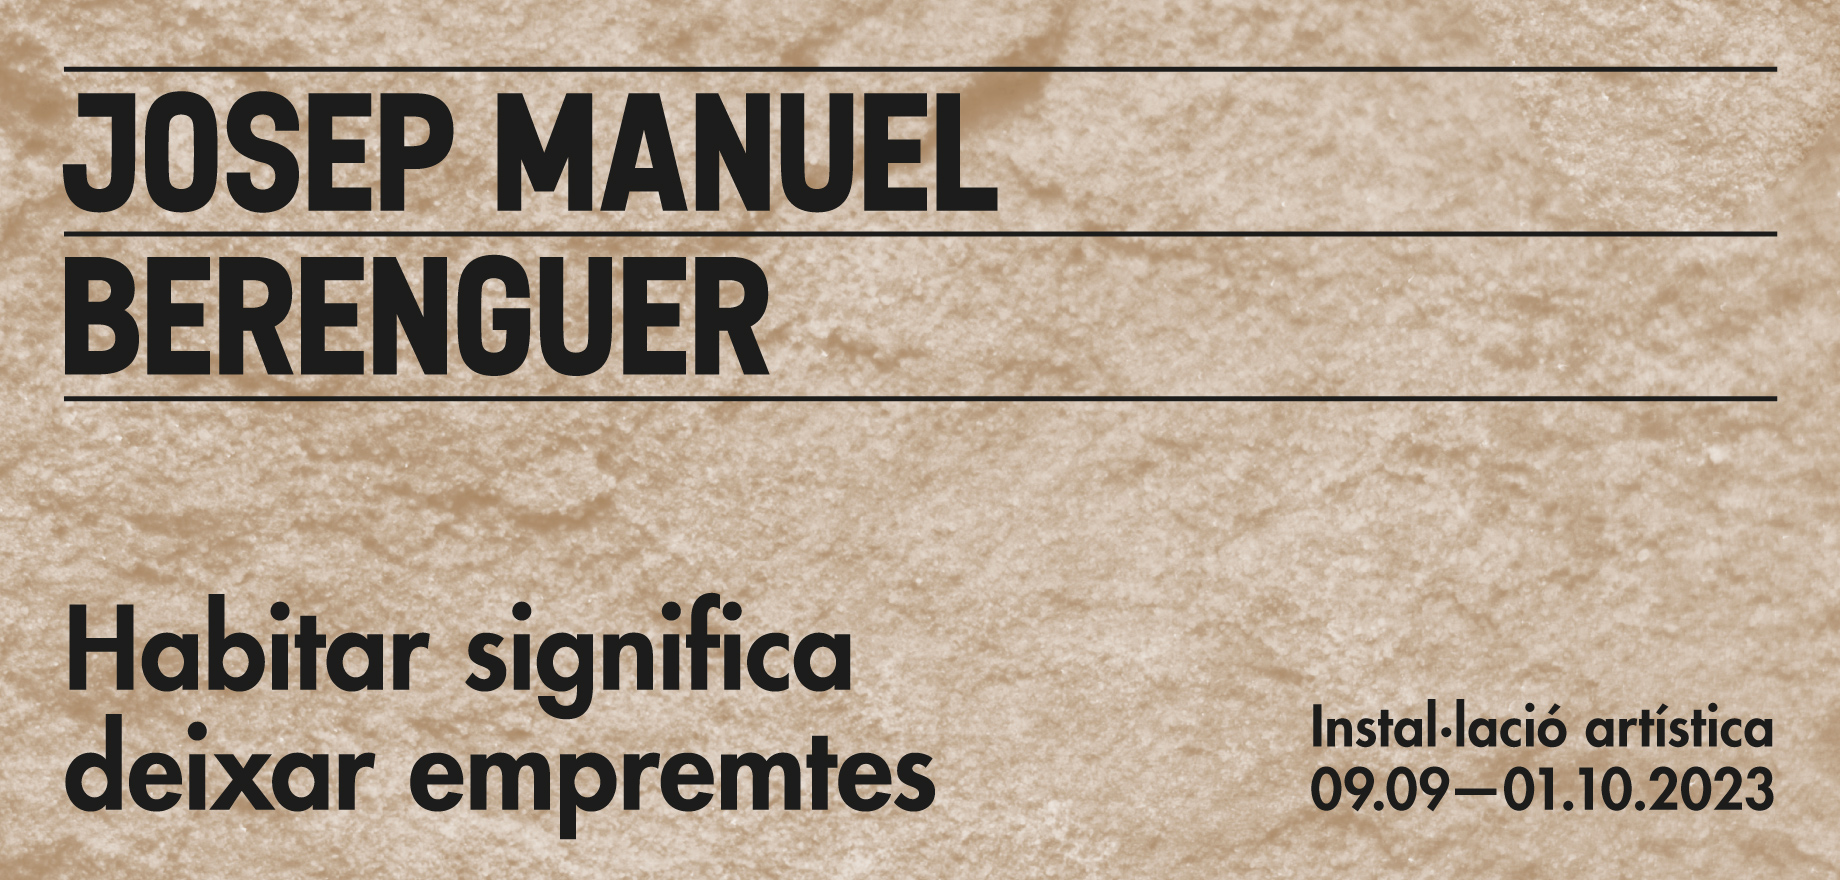 460X220_Josep Manuel Berenguer